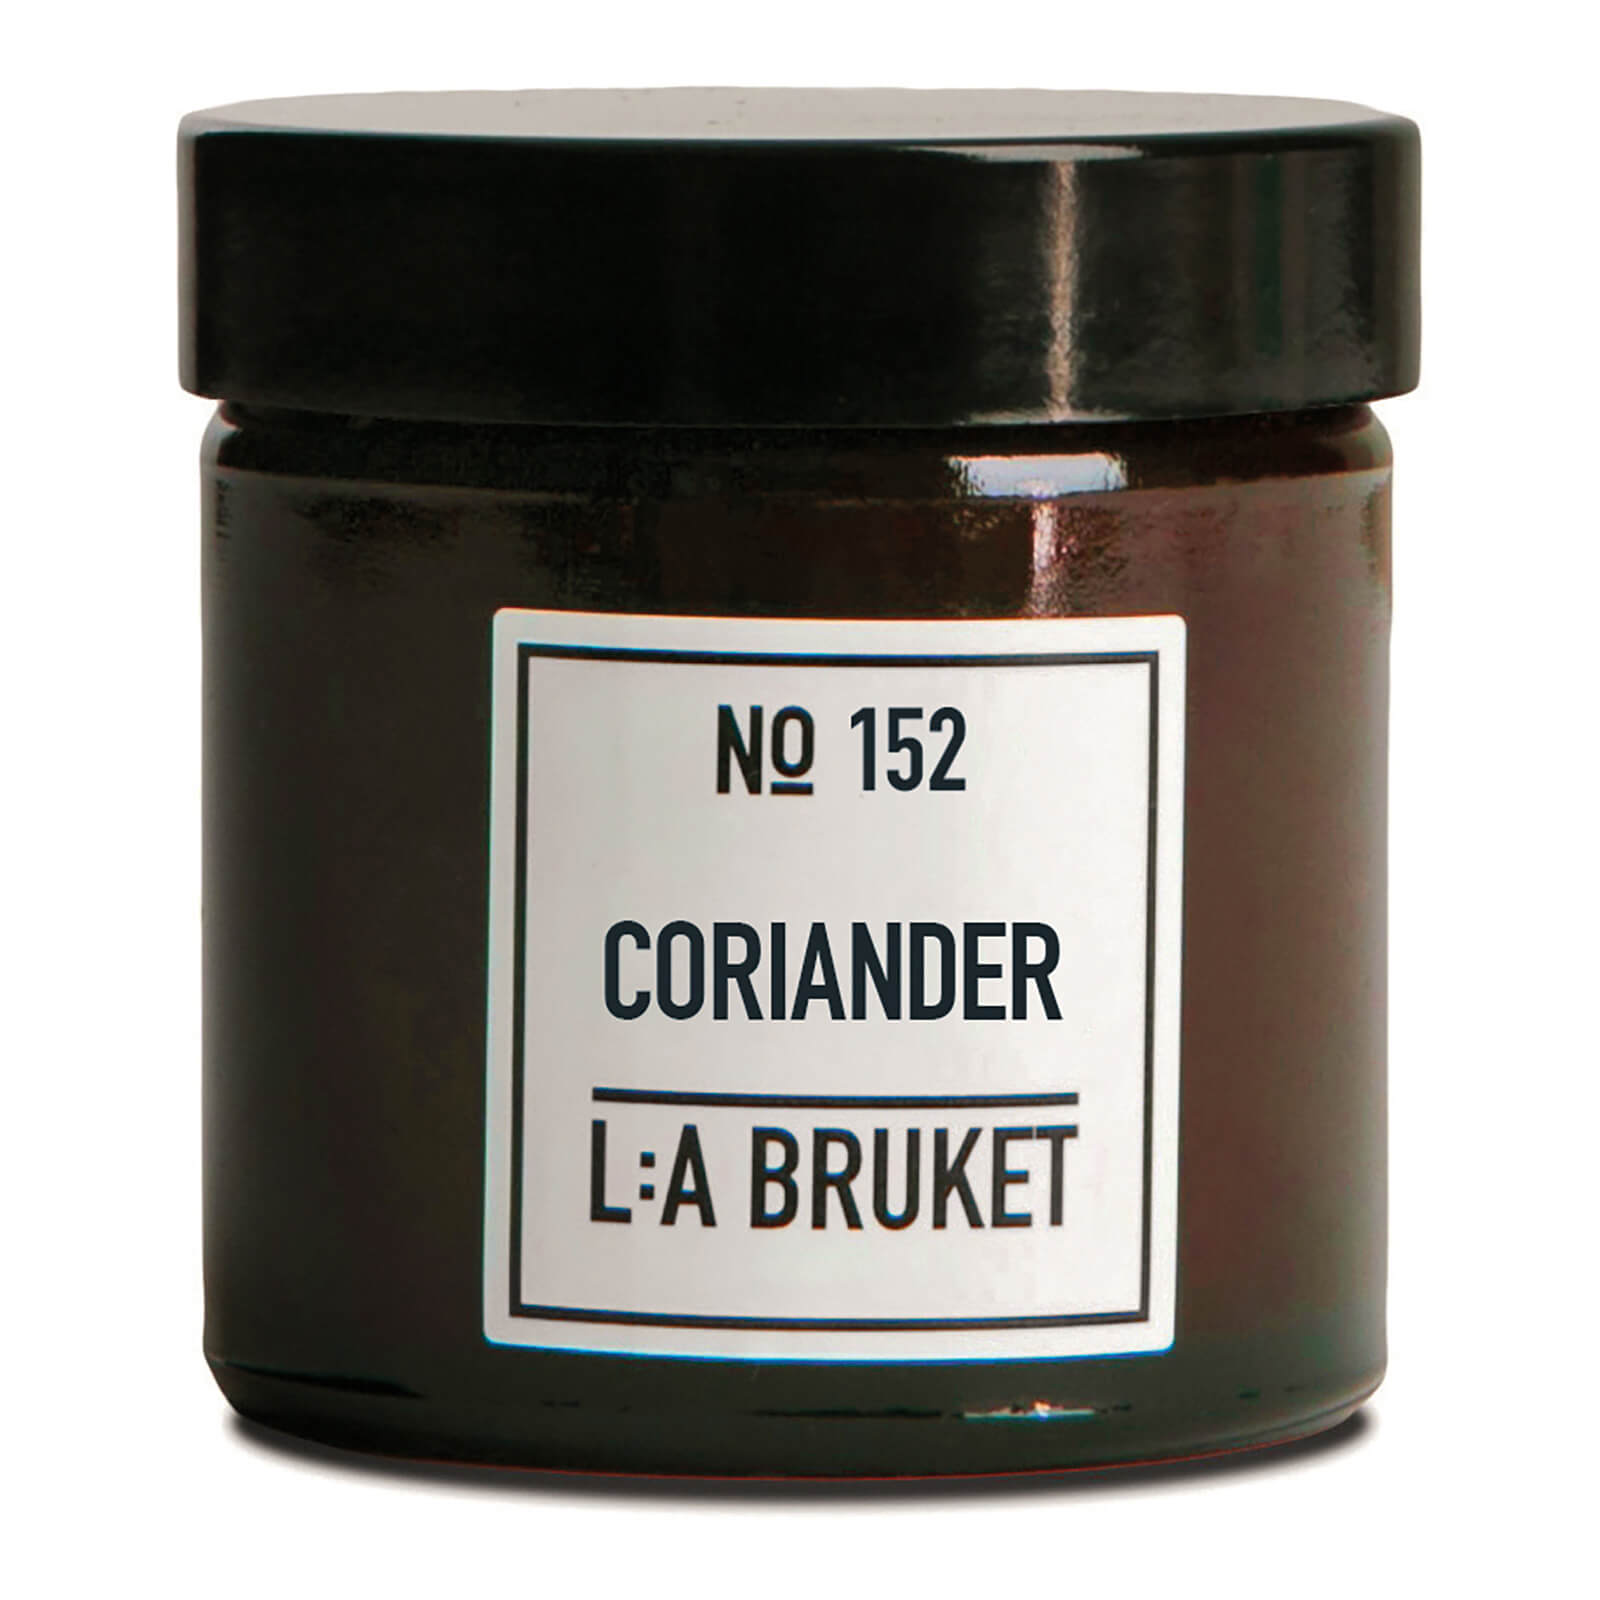 L:A BRUKET Small Coriander Scented Candle 50g